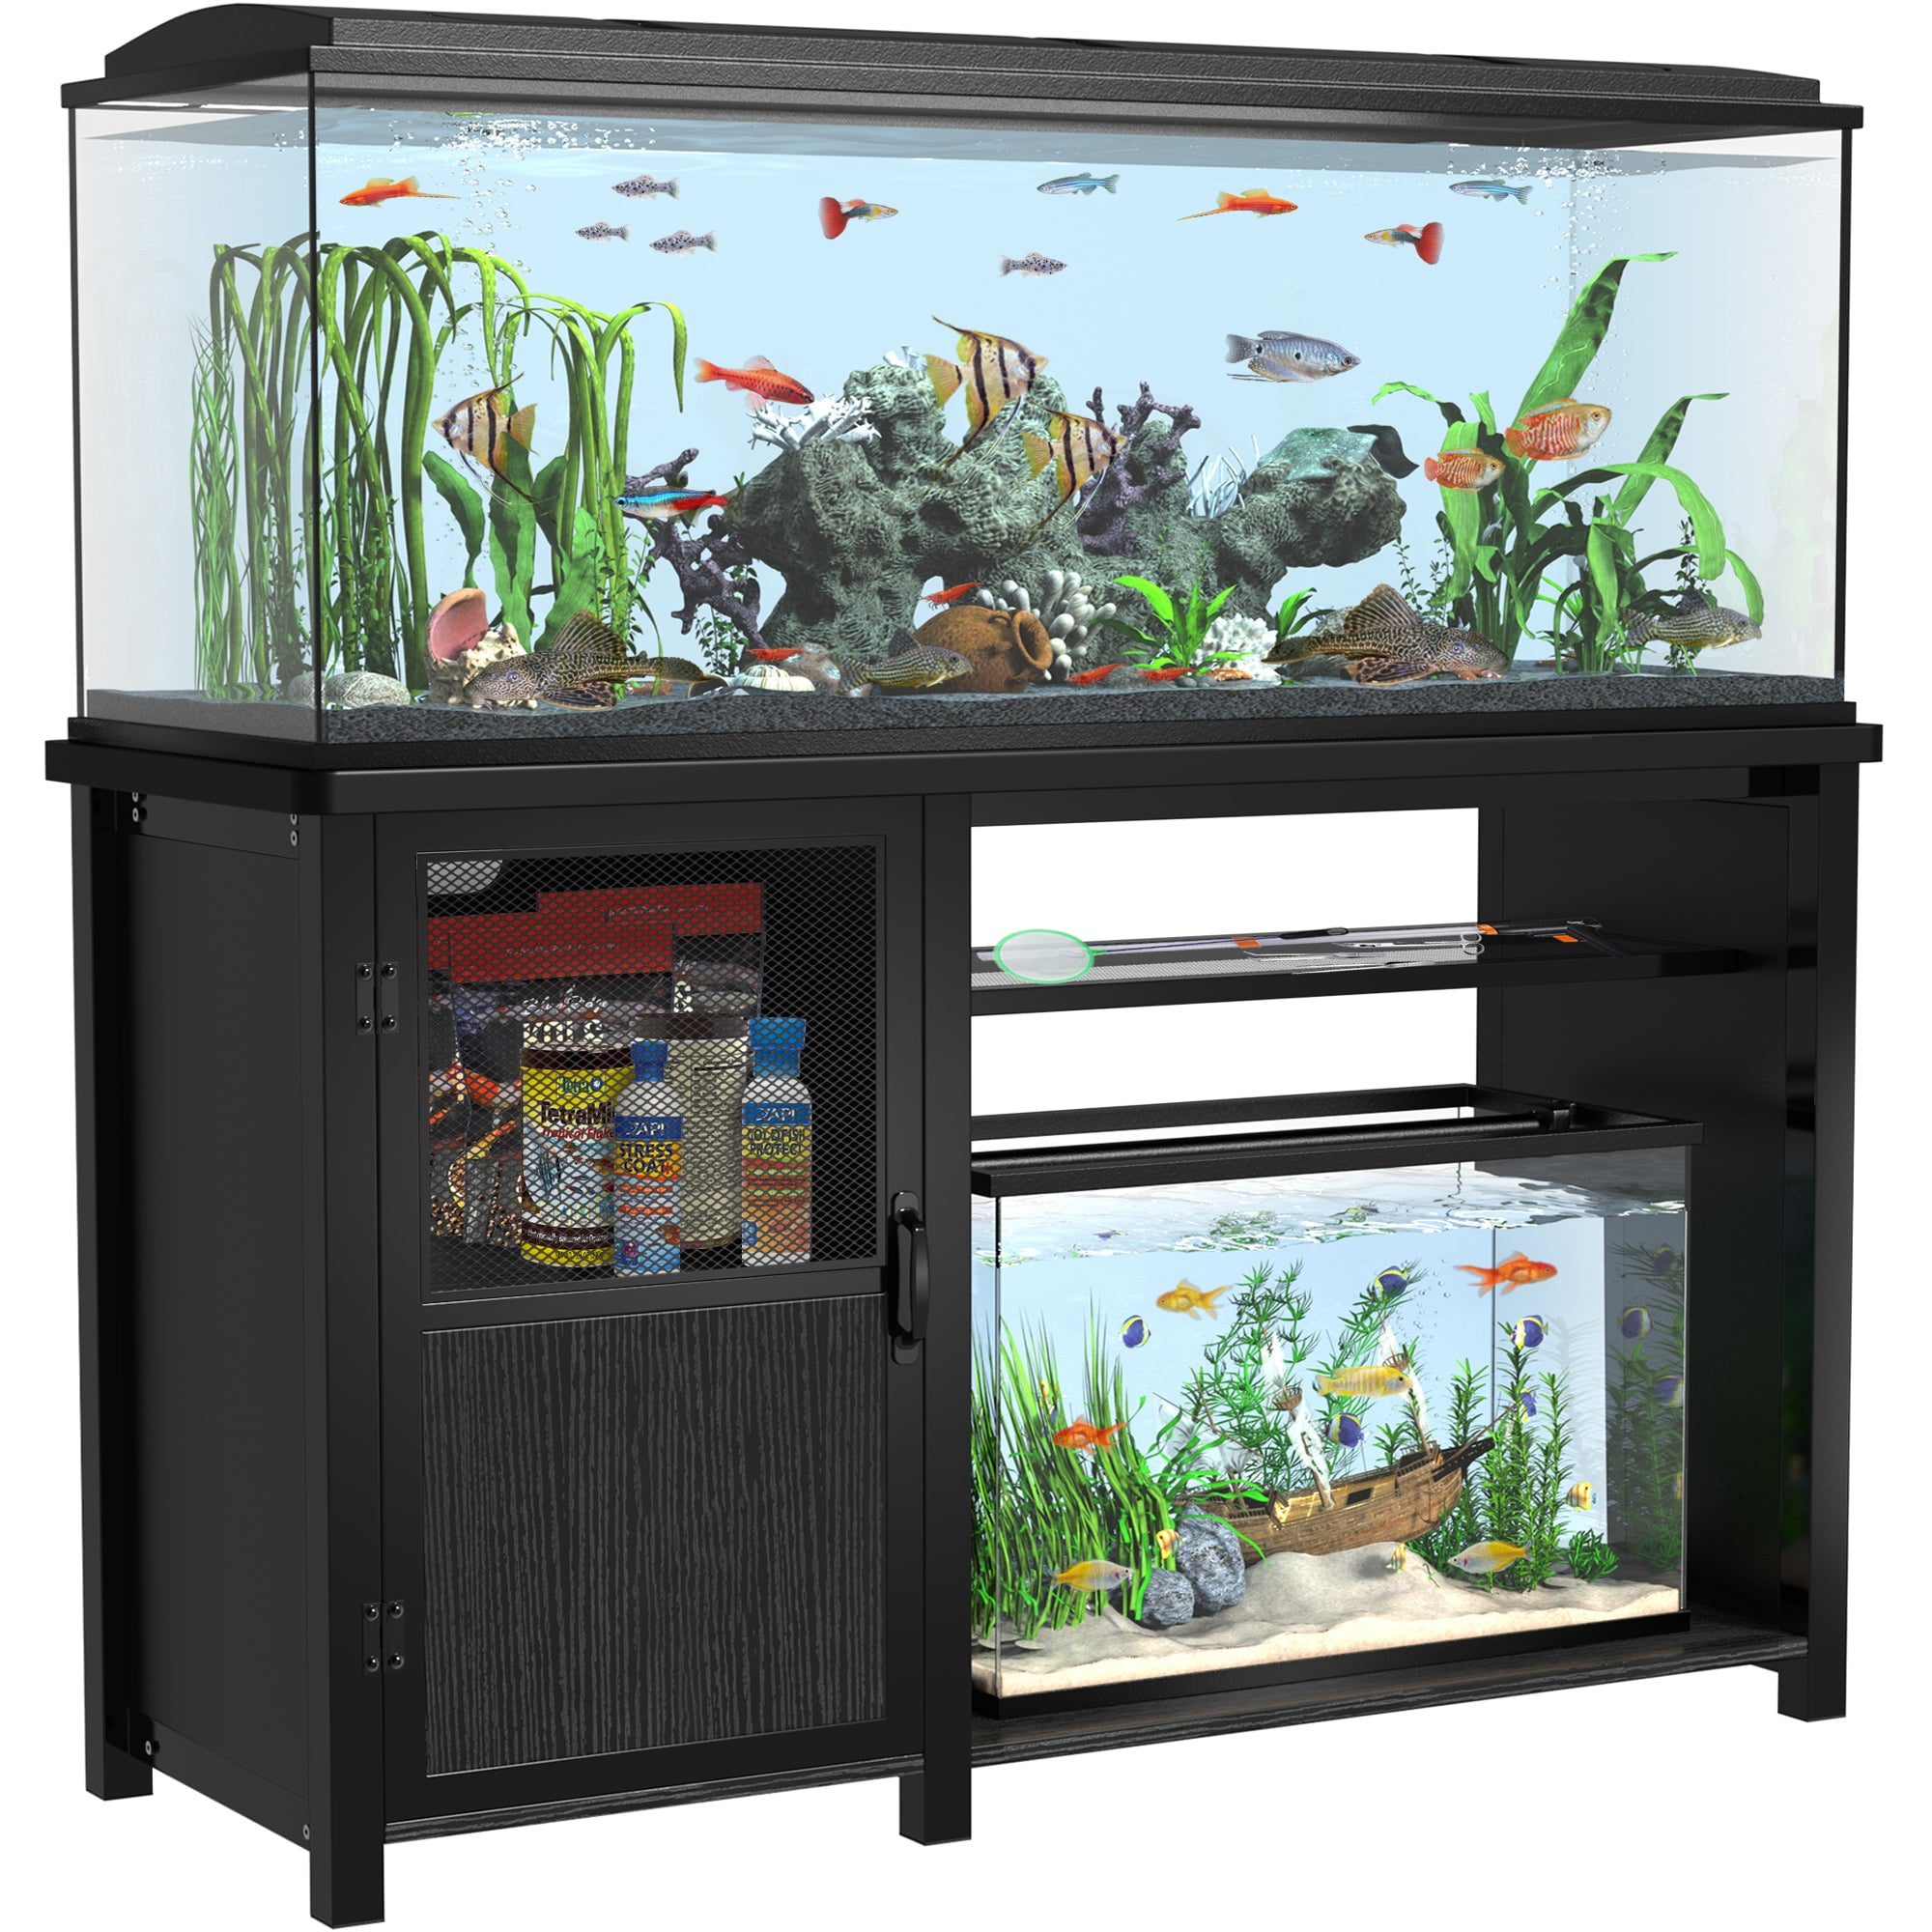 Gdlf Metal Aquarium Stand with Cabinet for Fish Tank Accessories Storage, 40 Gallon, Turtle Reptile Terrariums